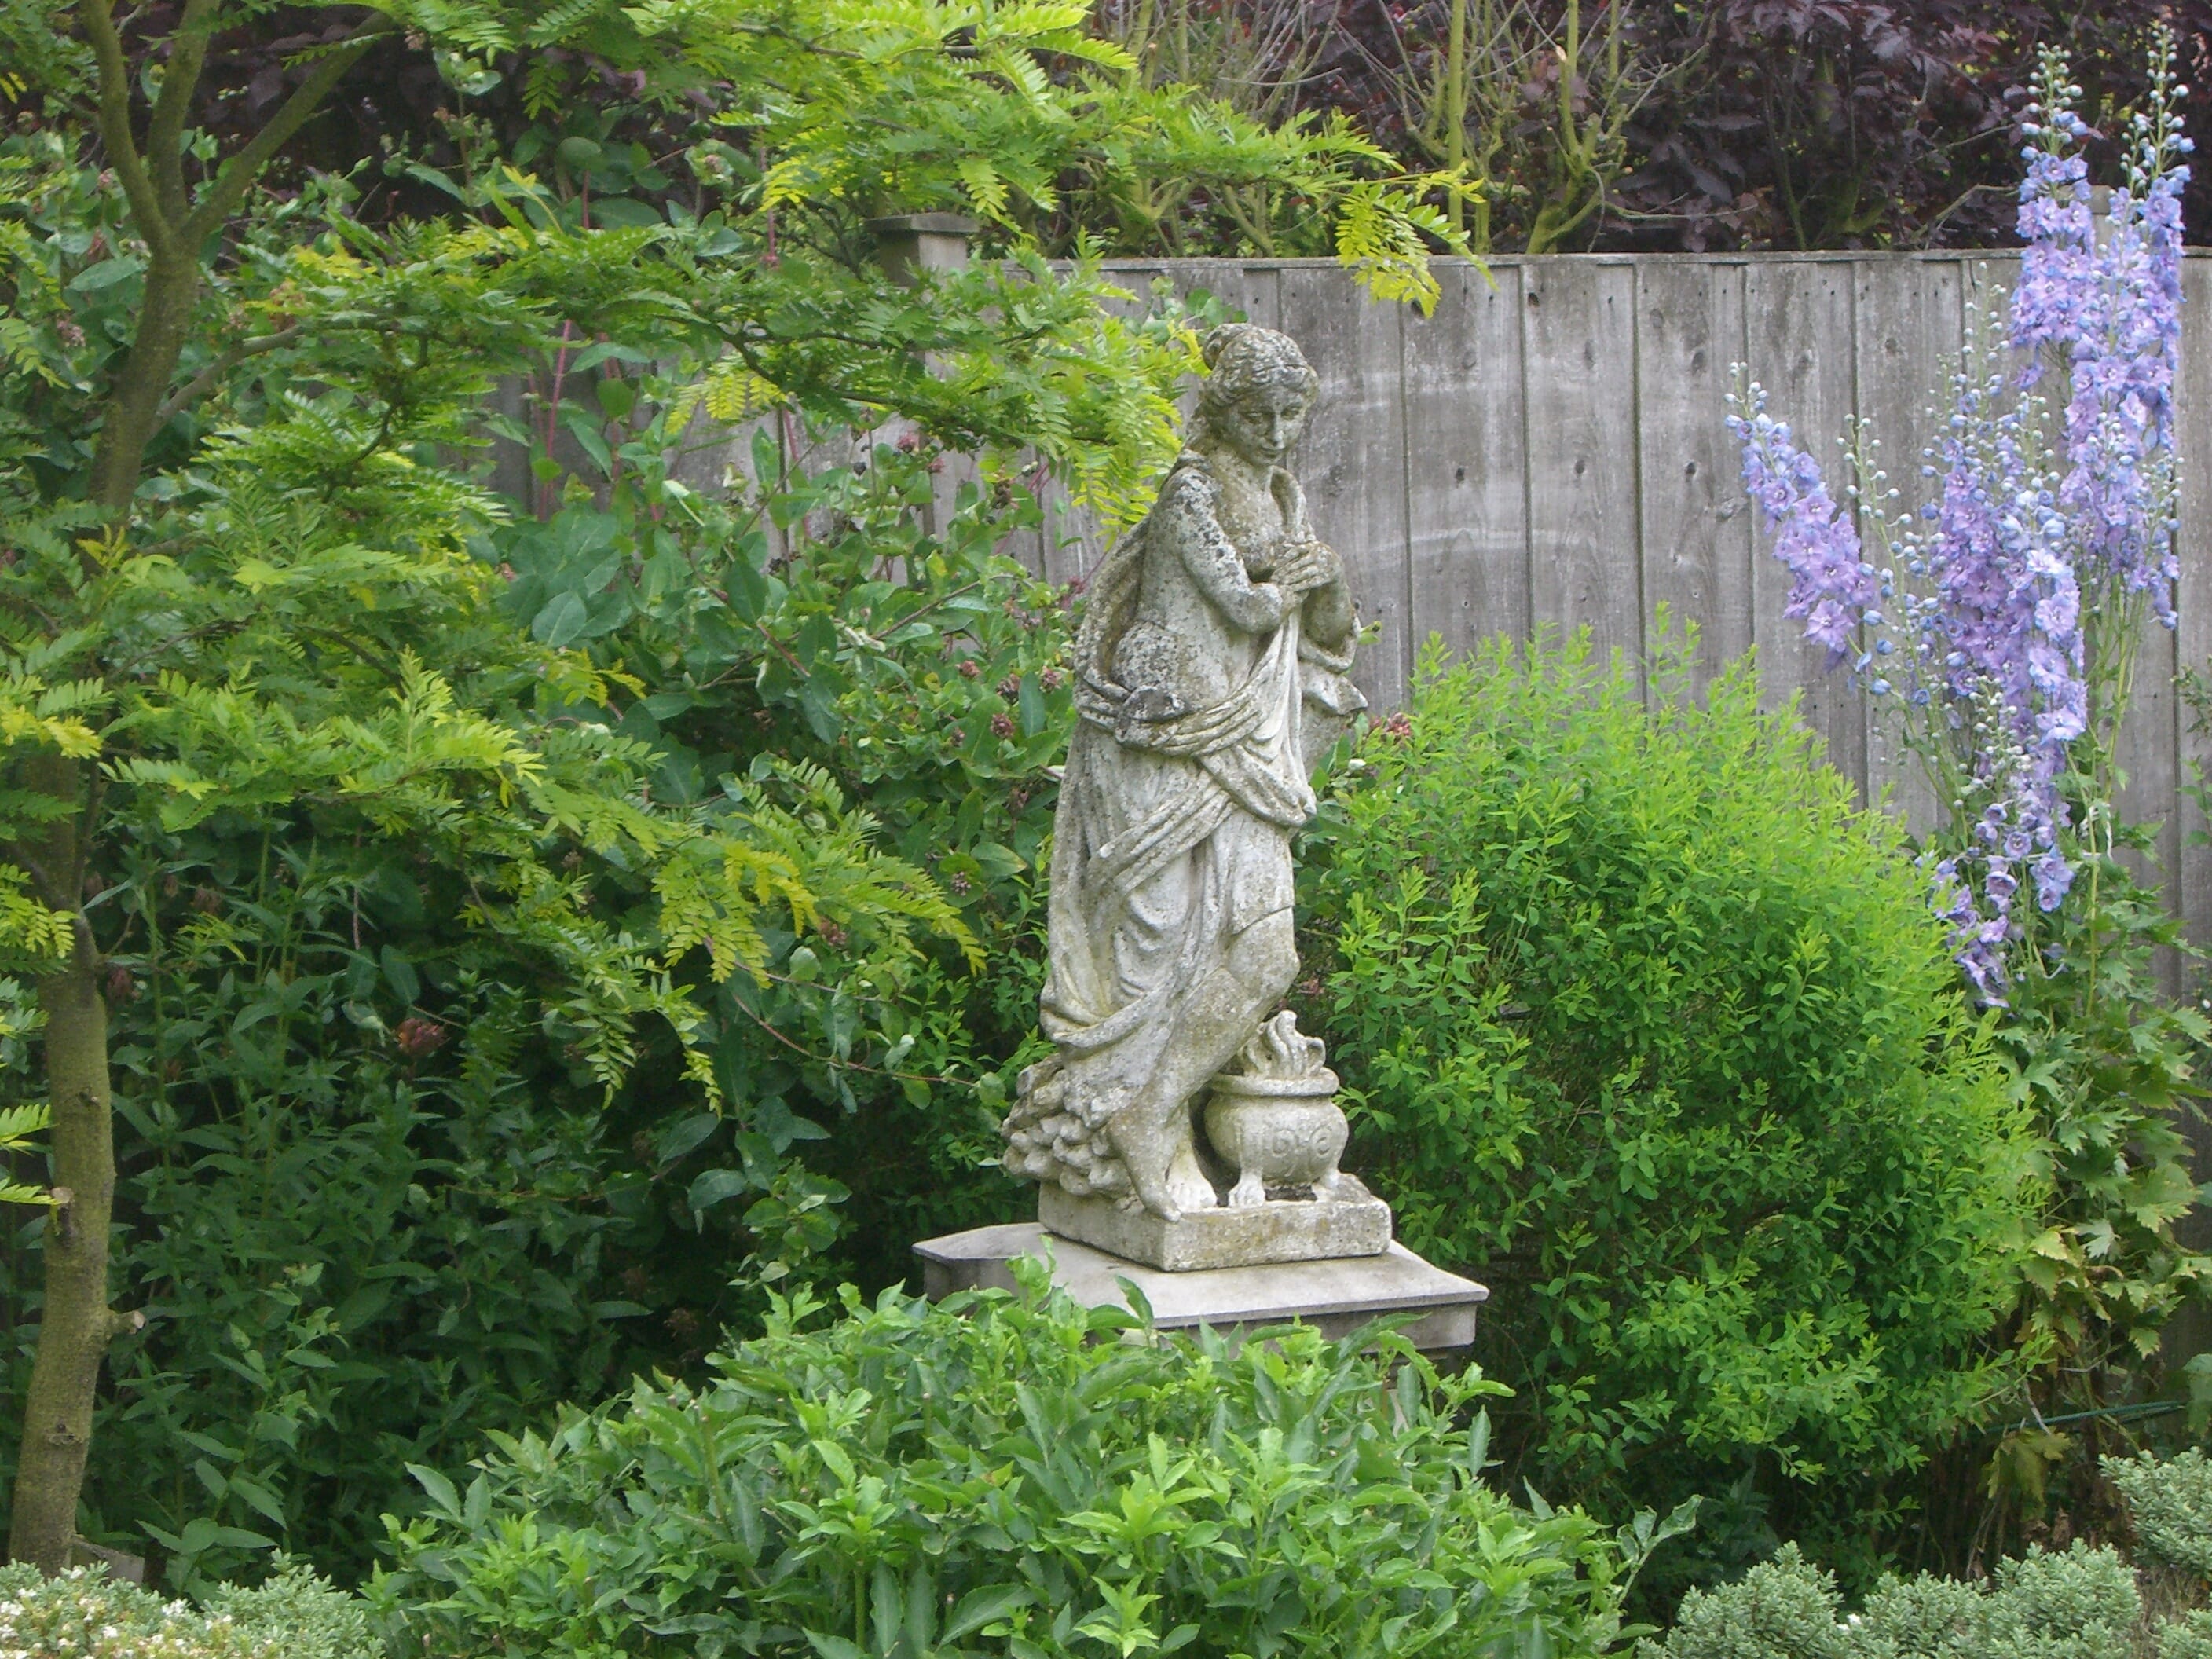 Antique Garden Statue Made Of Stone